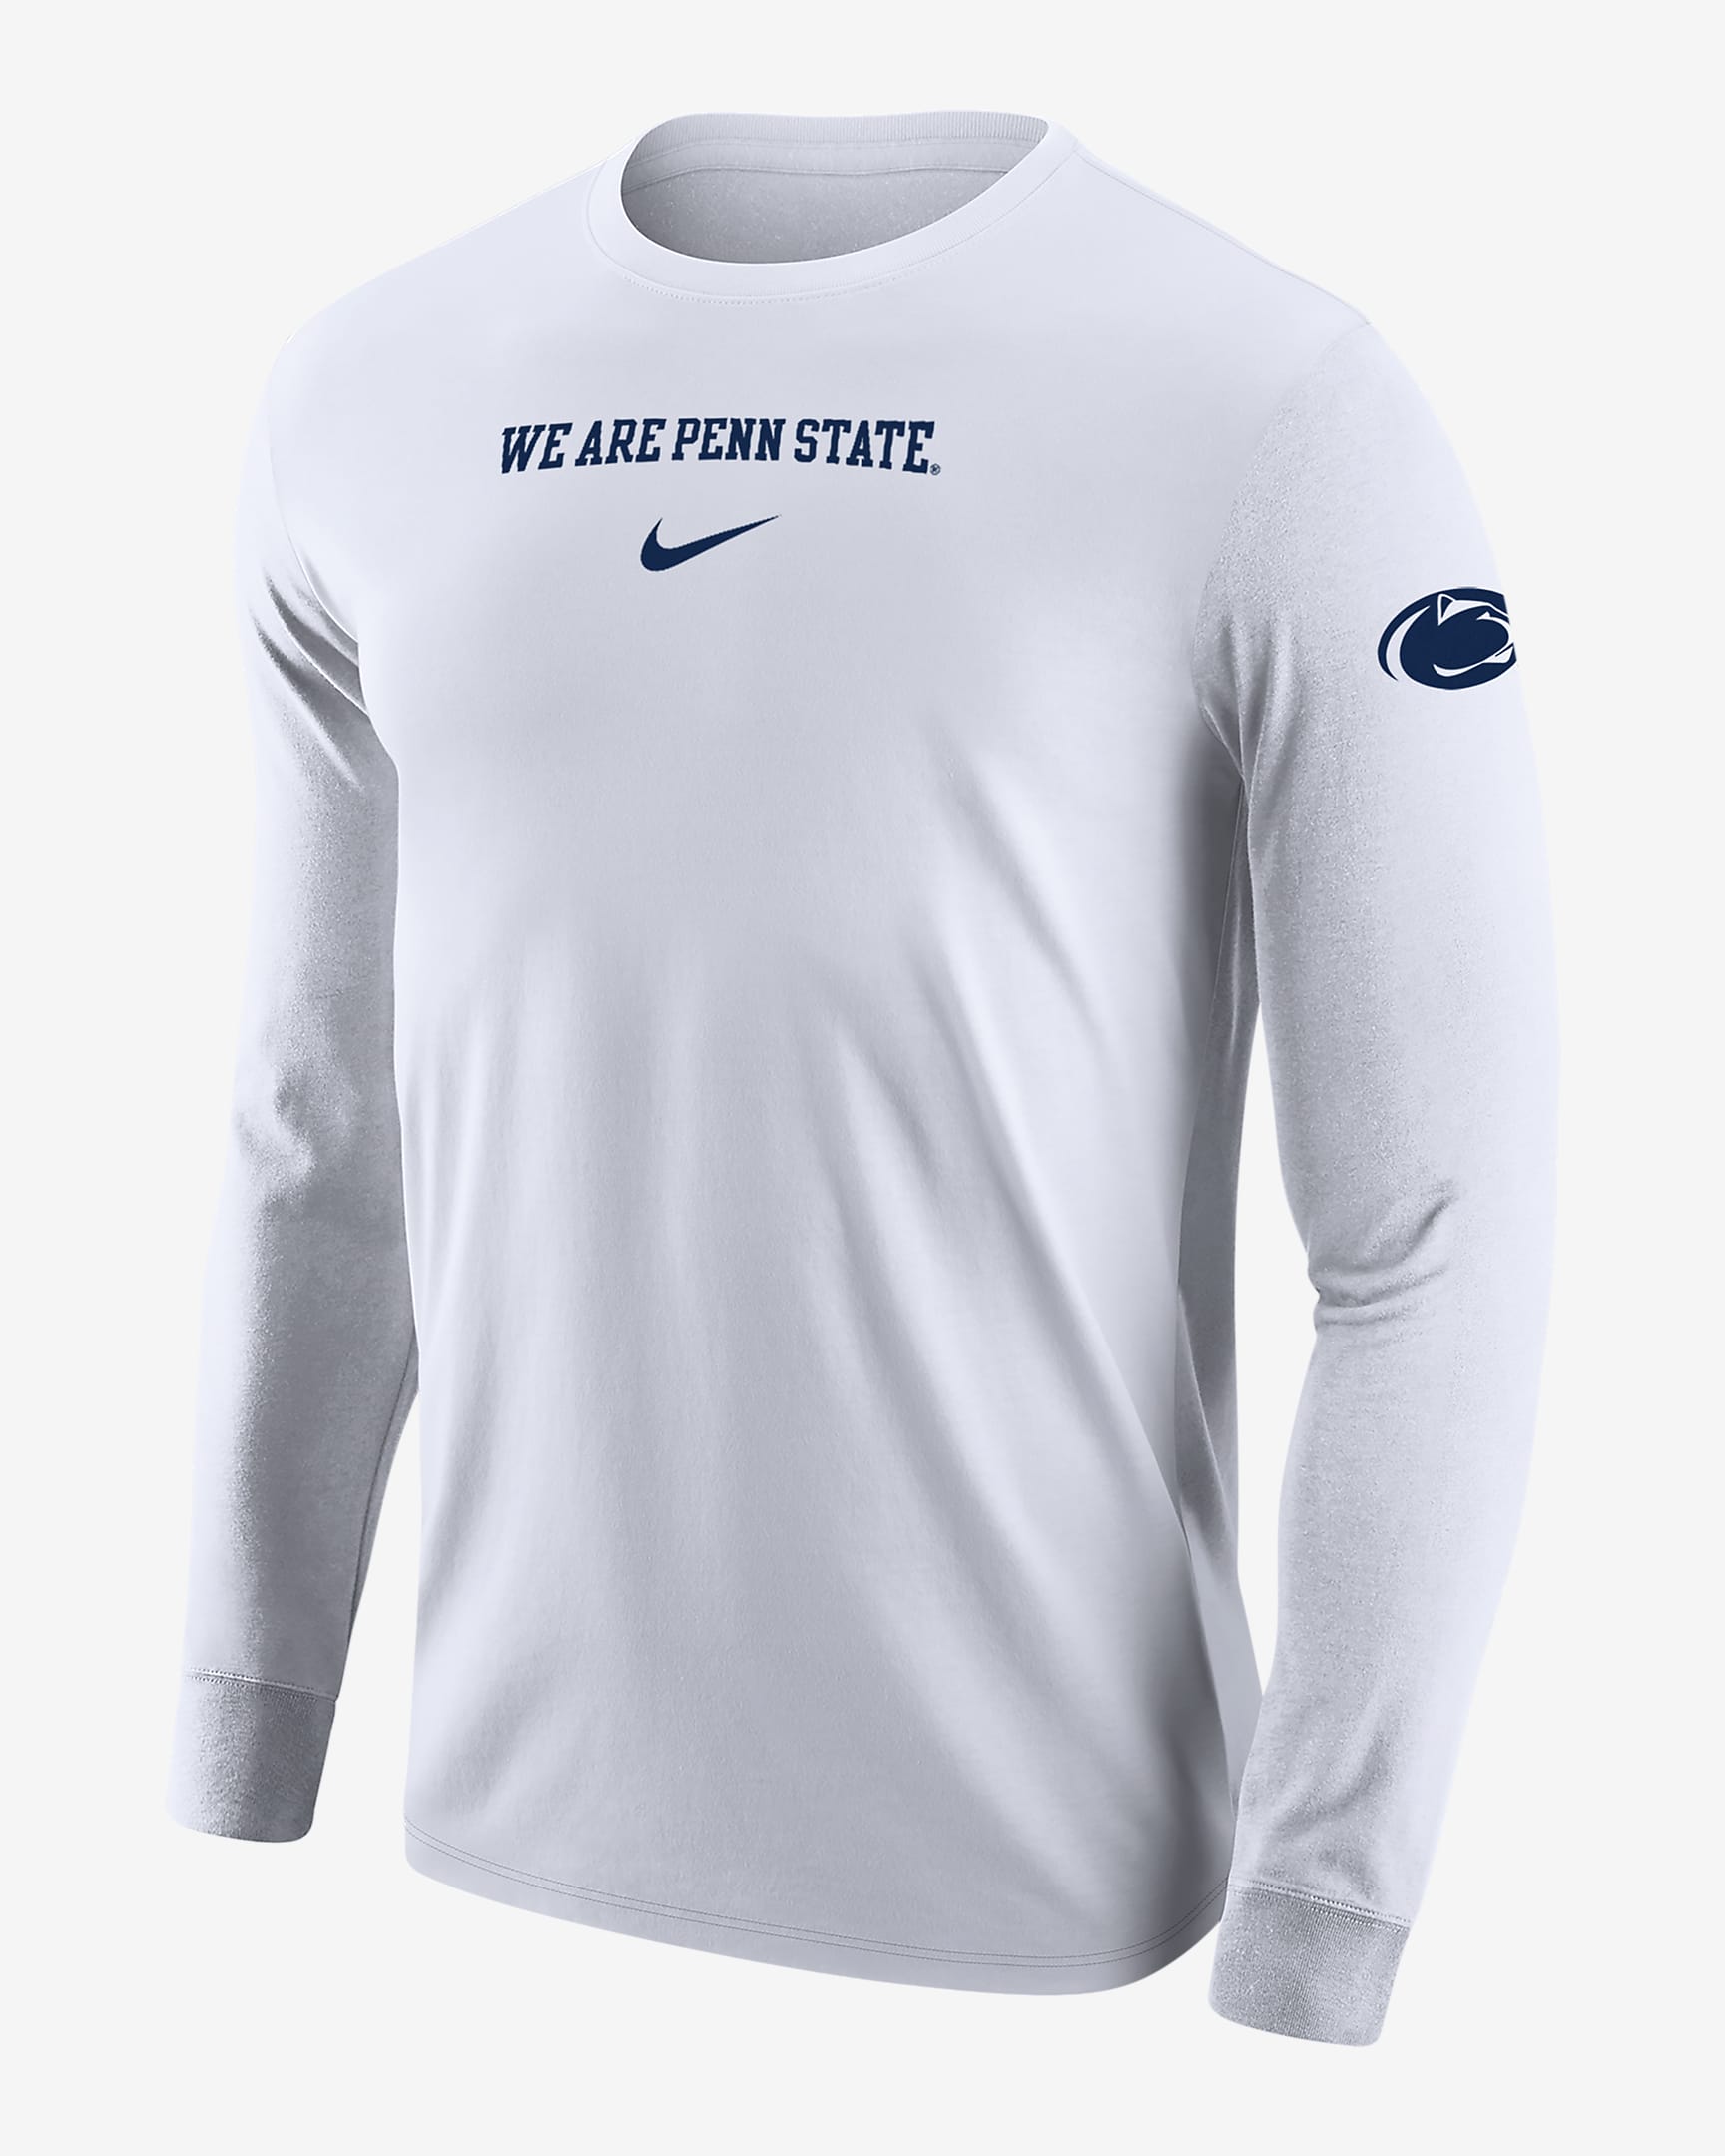 Penn State Men's Nike College Long-Sleeve T-Shirt. Nike.com